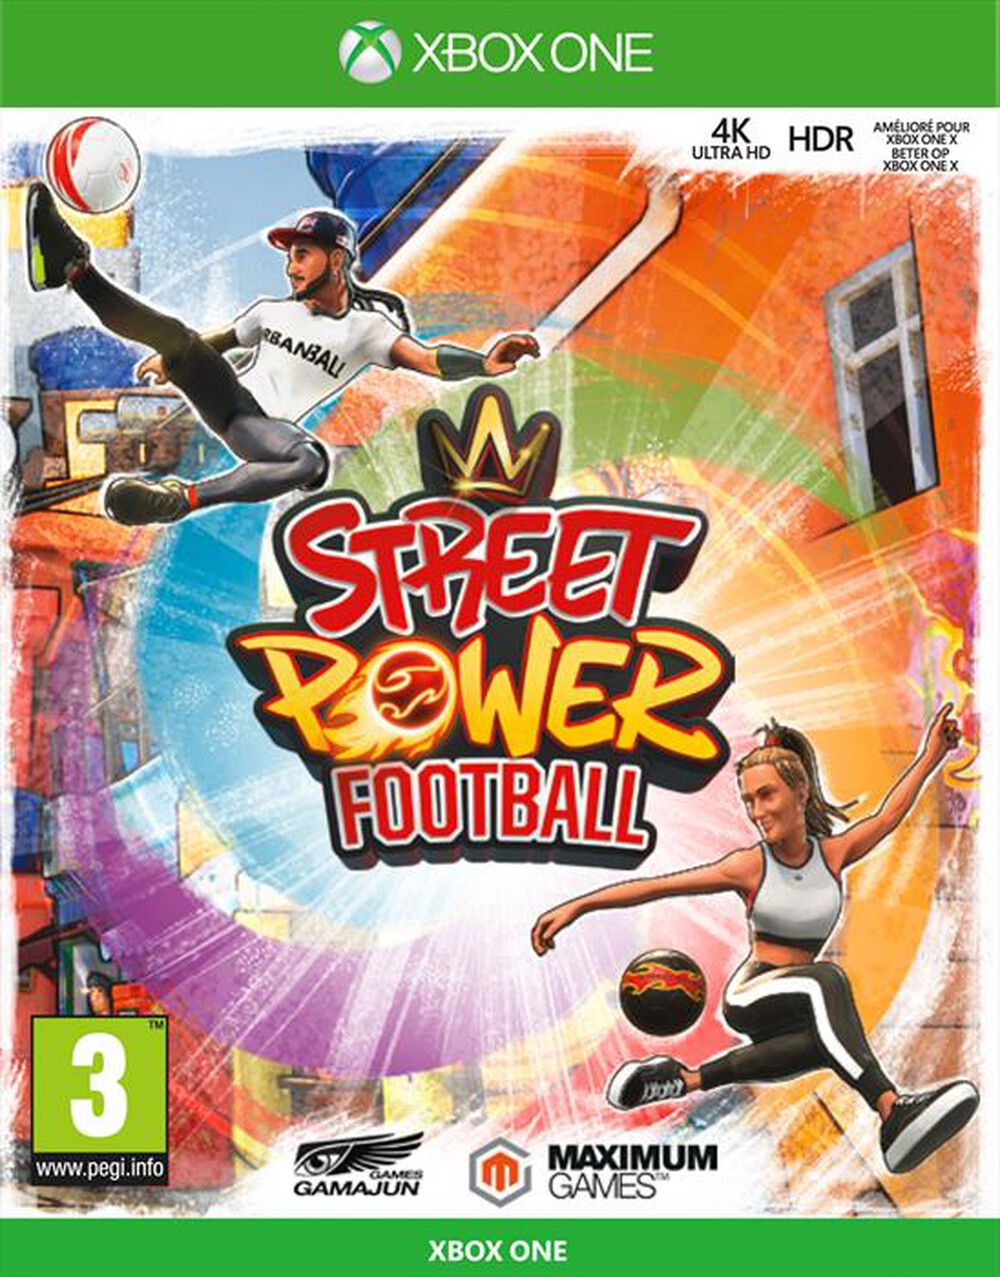 "MAXIMUM GAMES - STREET POWER FOOTBALL XONE"